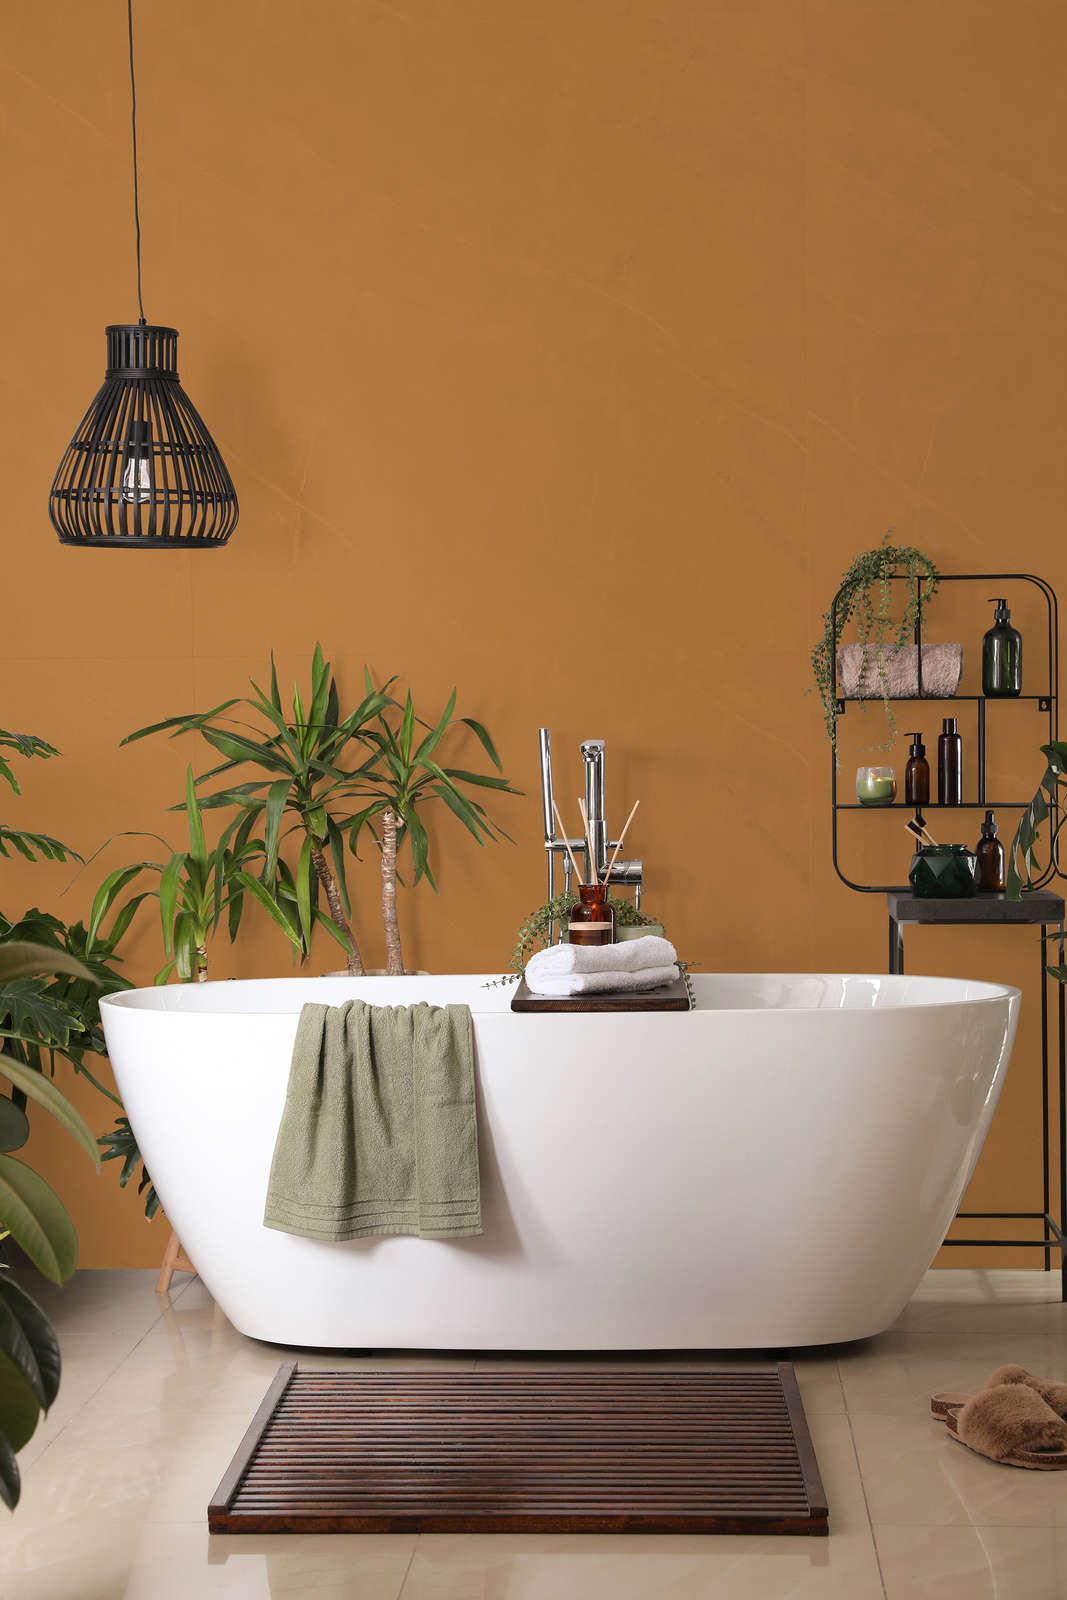             Peinture murale Premium brun clair intense »Beige Orange/Sassy Saffron« NW814 – 1 litres
        